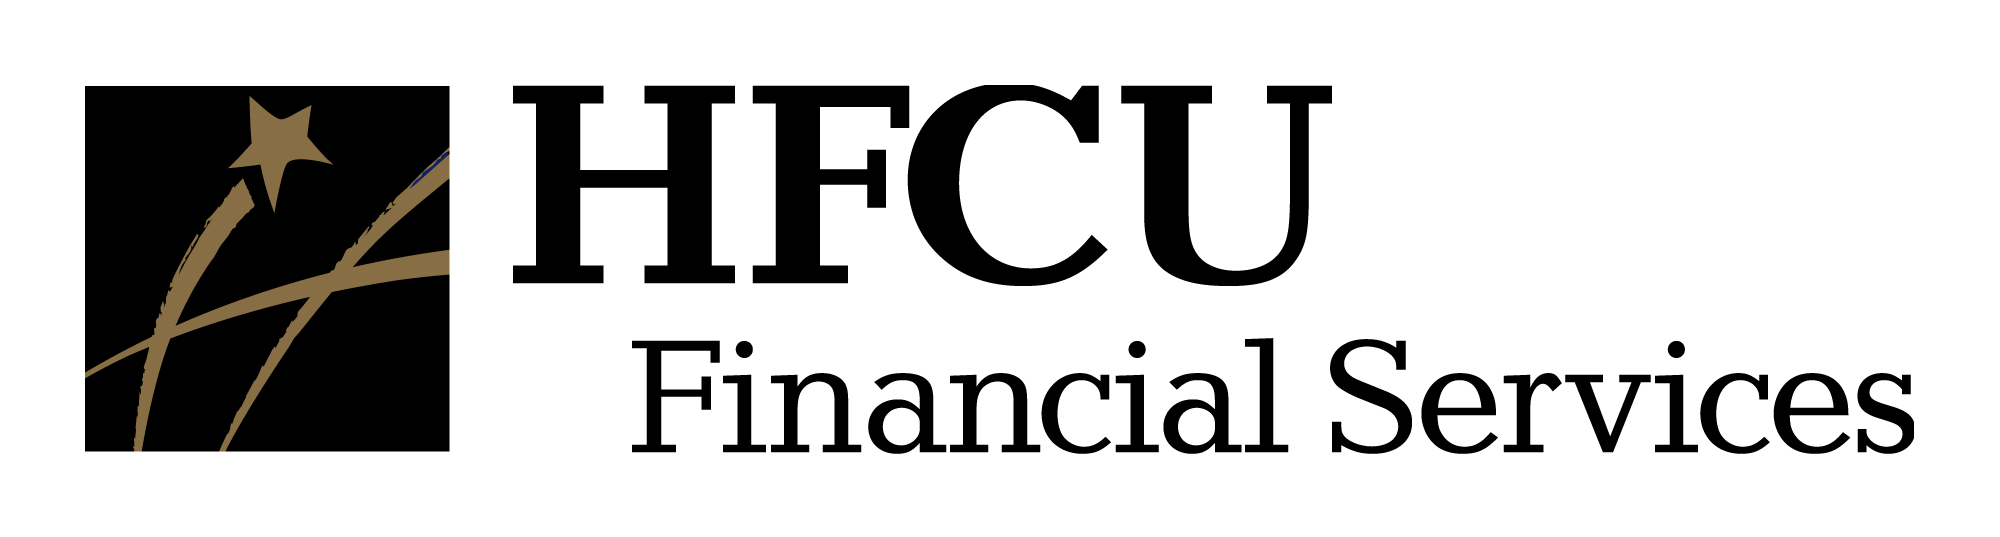 HFCU Financial Services logo